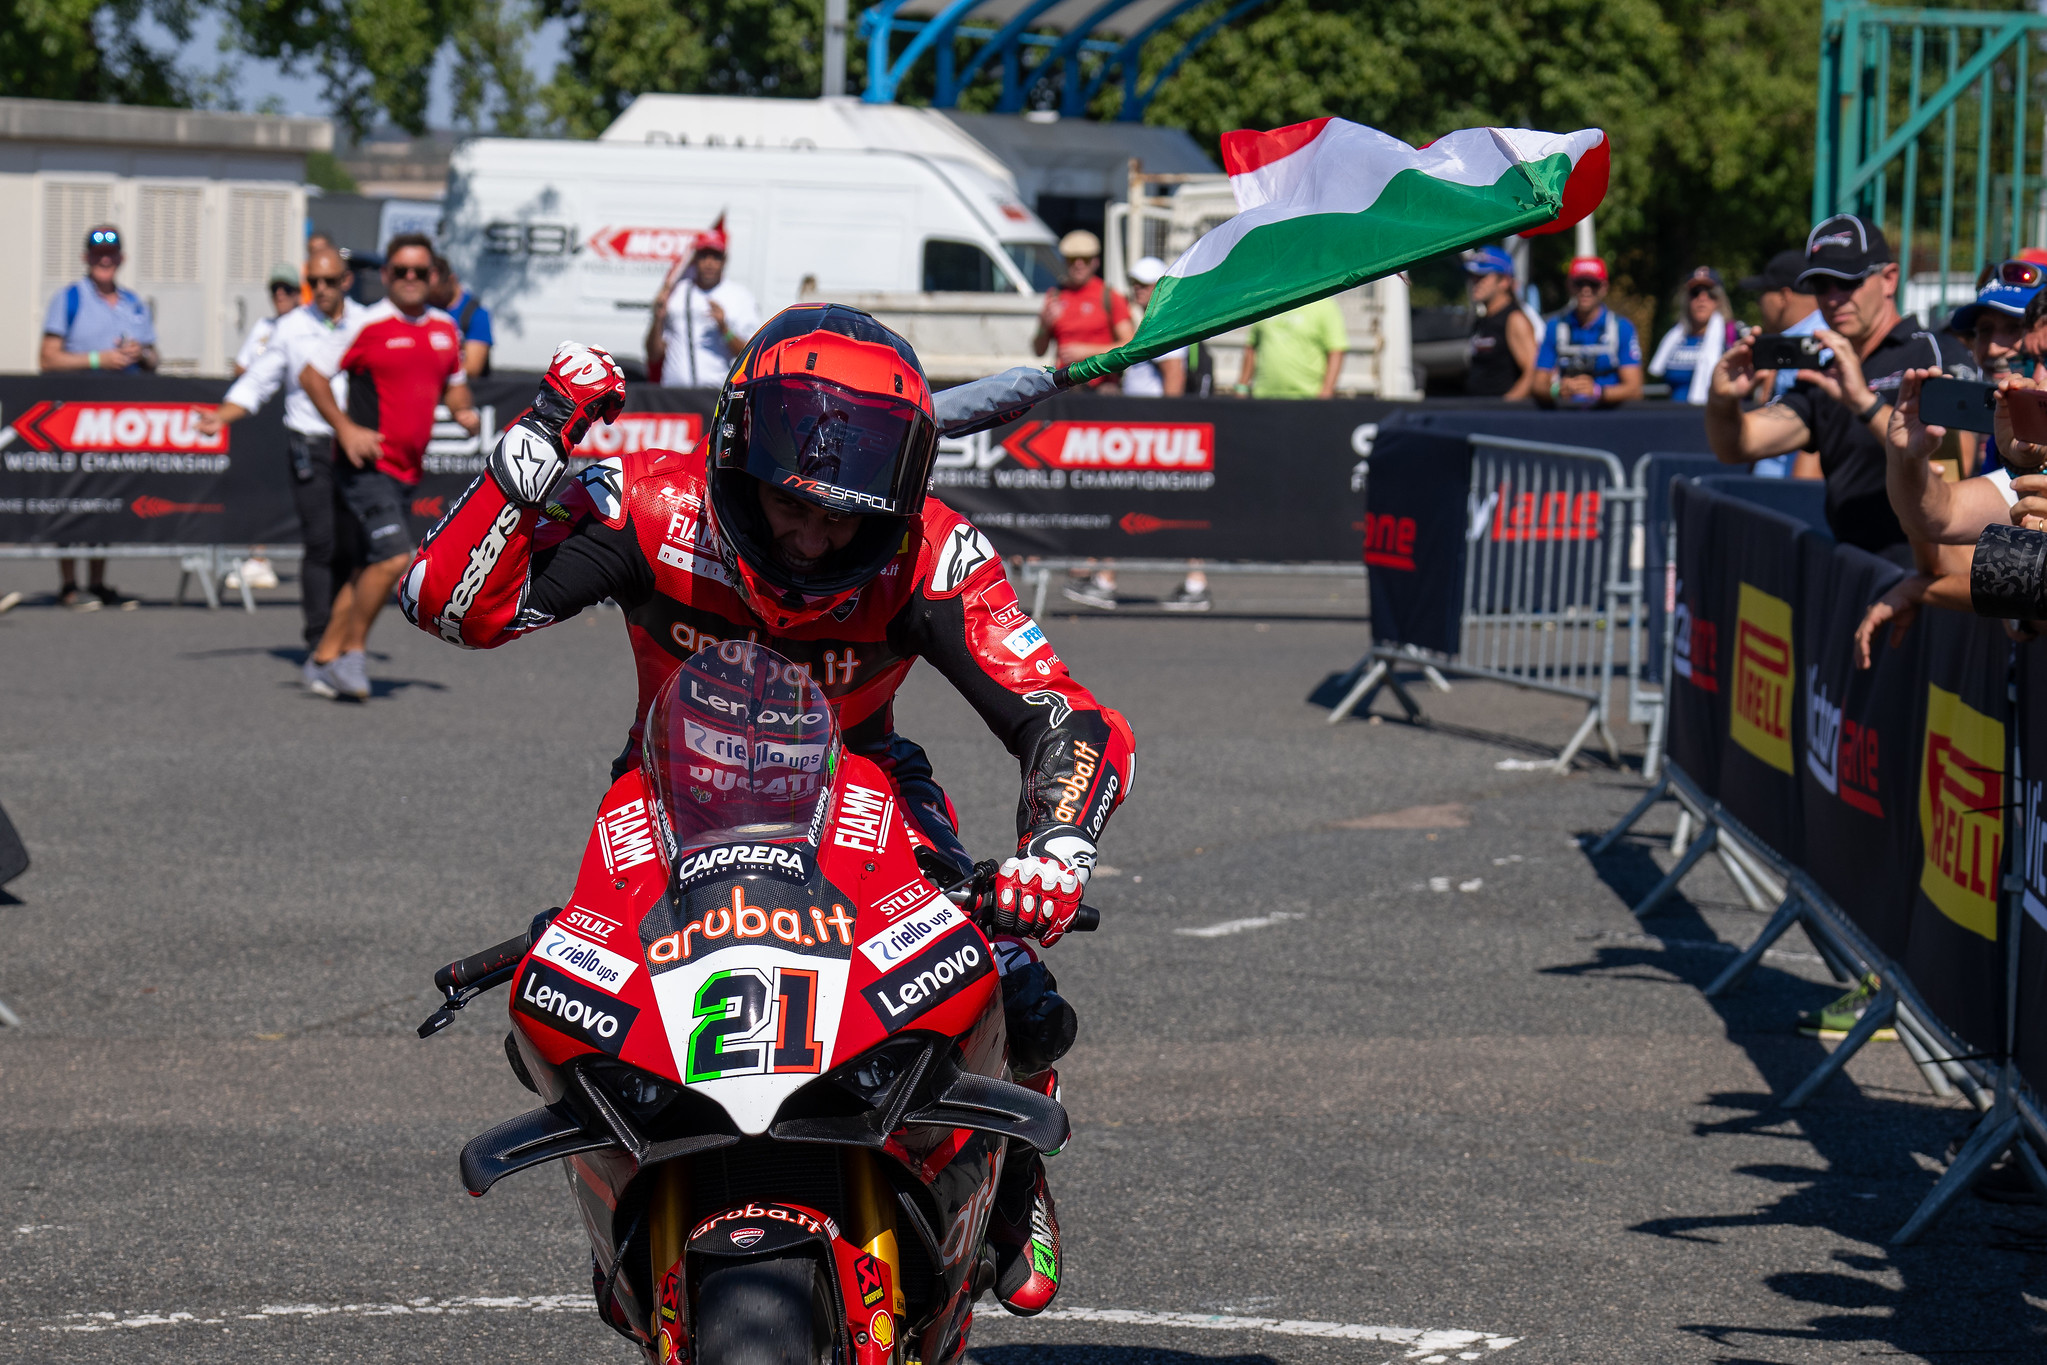 #21 Michael Rinaldi - ITA - Aruba.It Racing Ducati - Ducati Panigale V4R